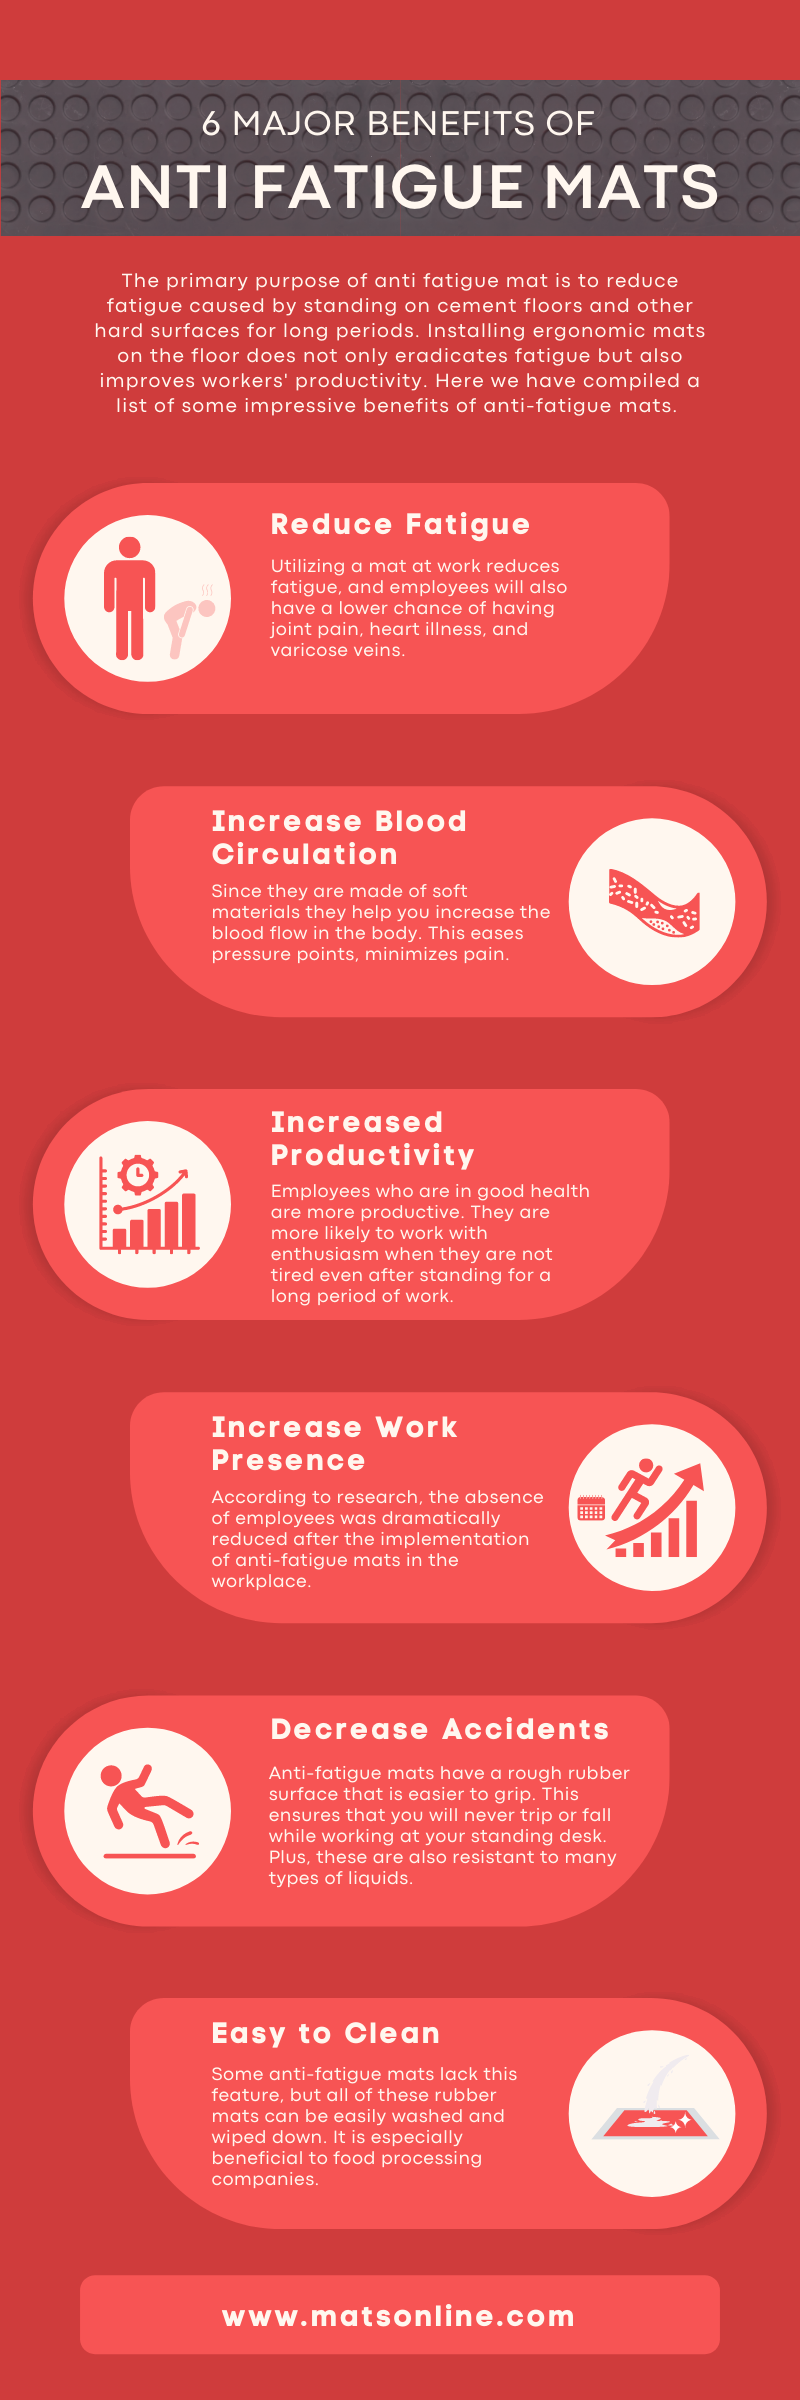 6 Major Benefits of Anti Fatigue Mats